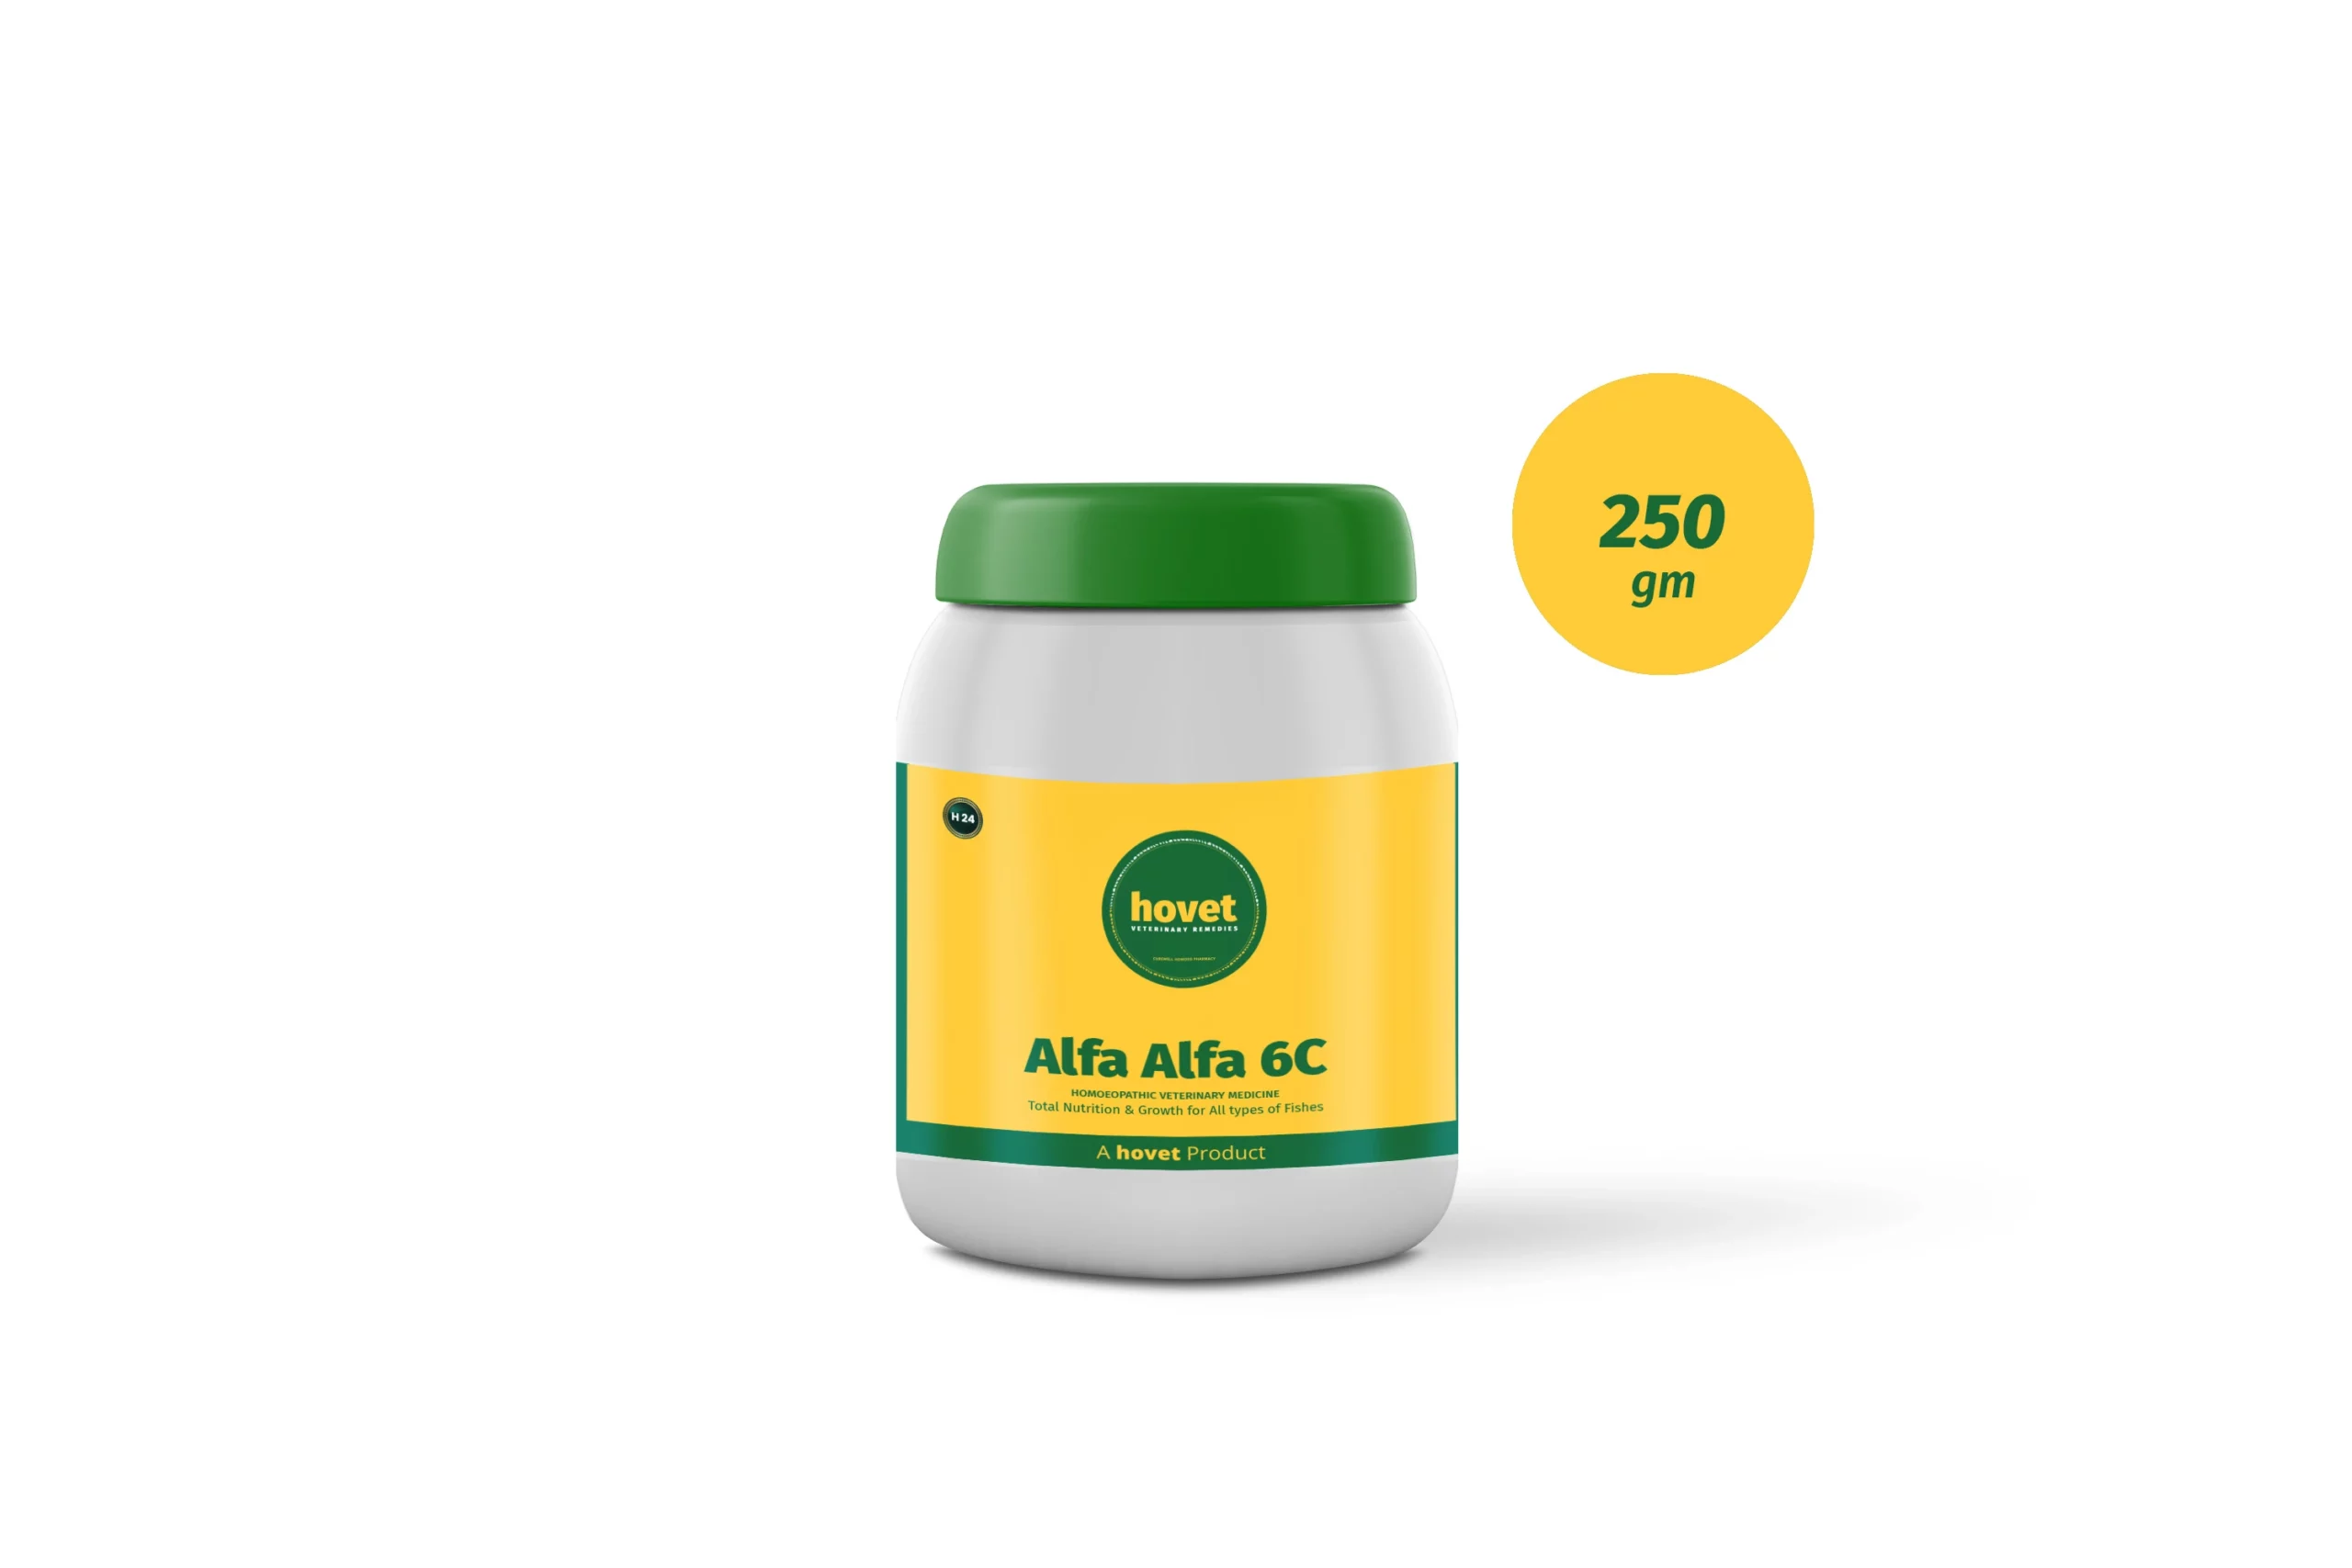 Alfa Alfa 6C - 250gm | Curewell Homoeo Pharmacy